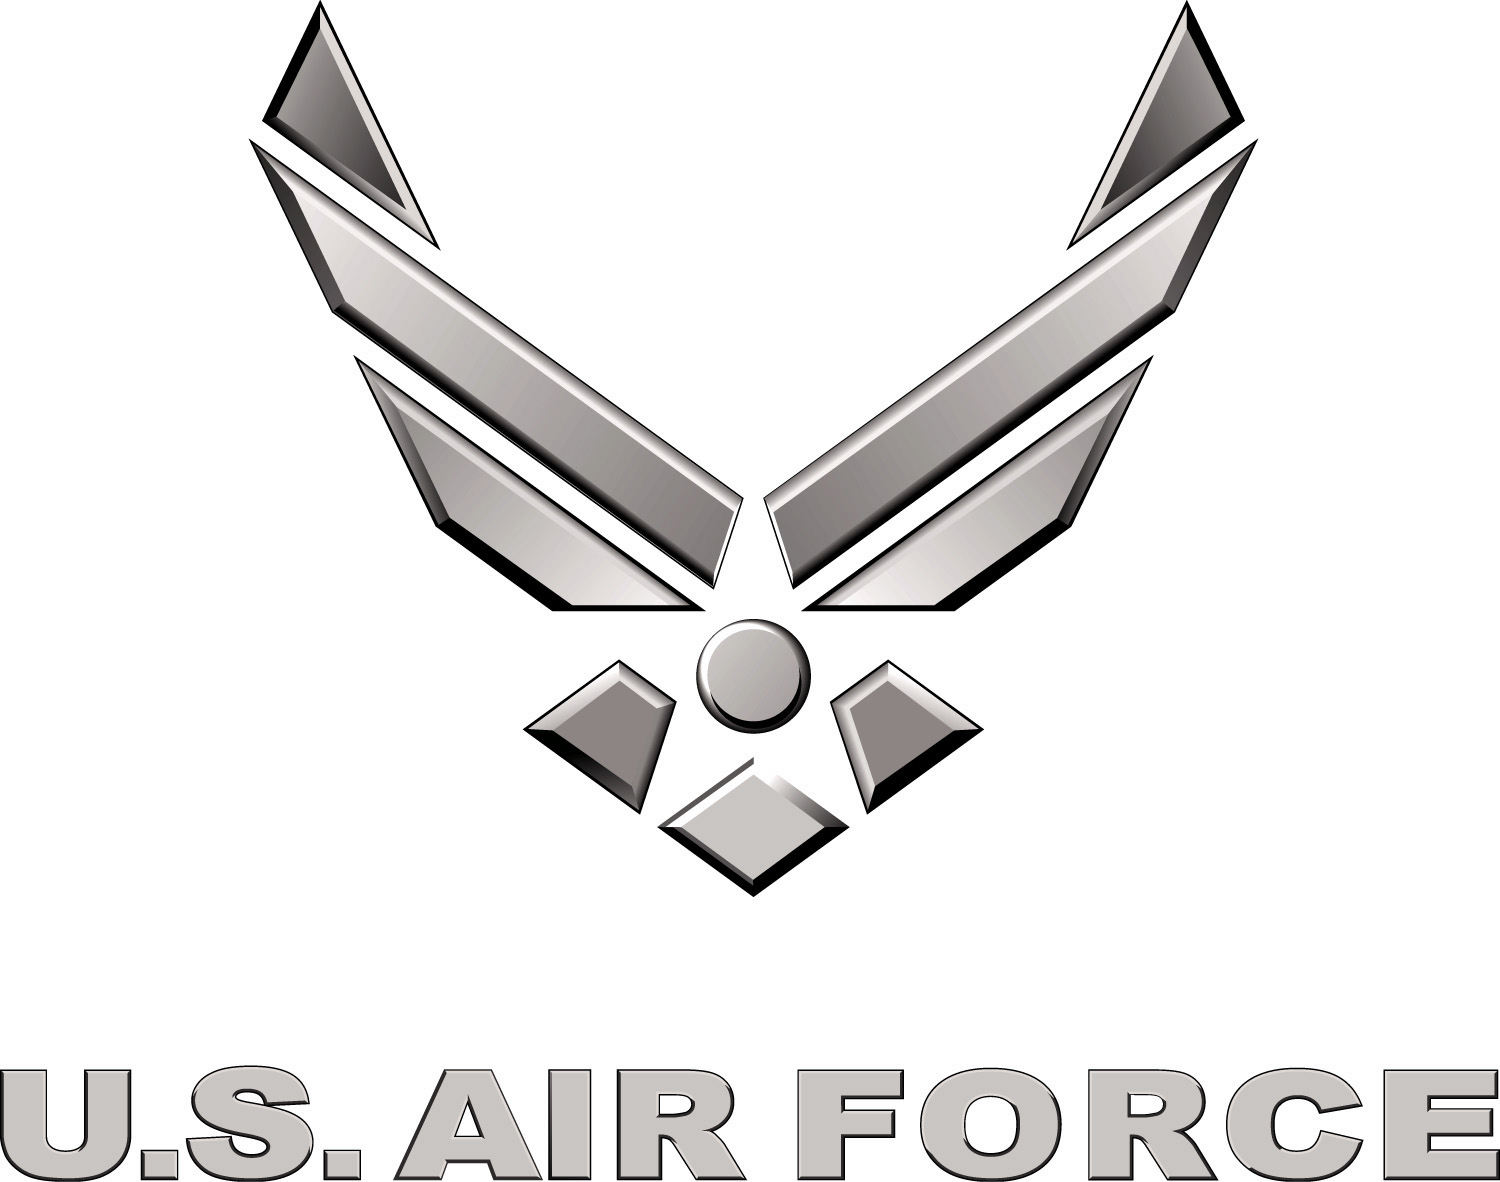  Description US Air Force Logo Silverjpg